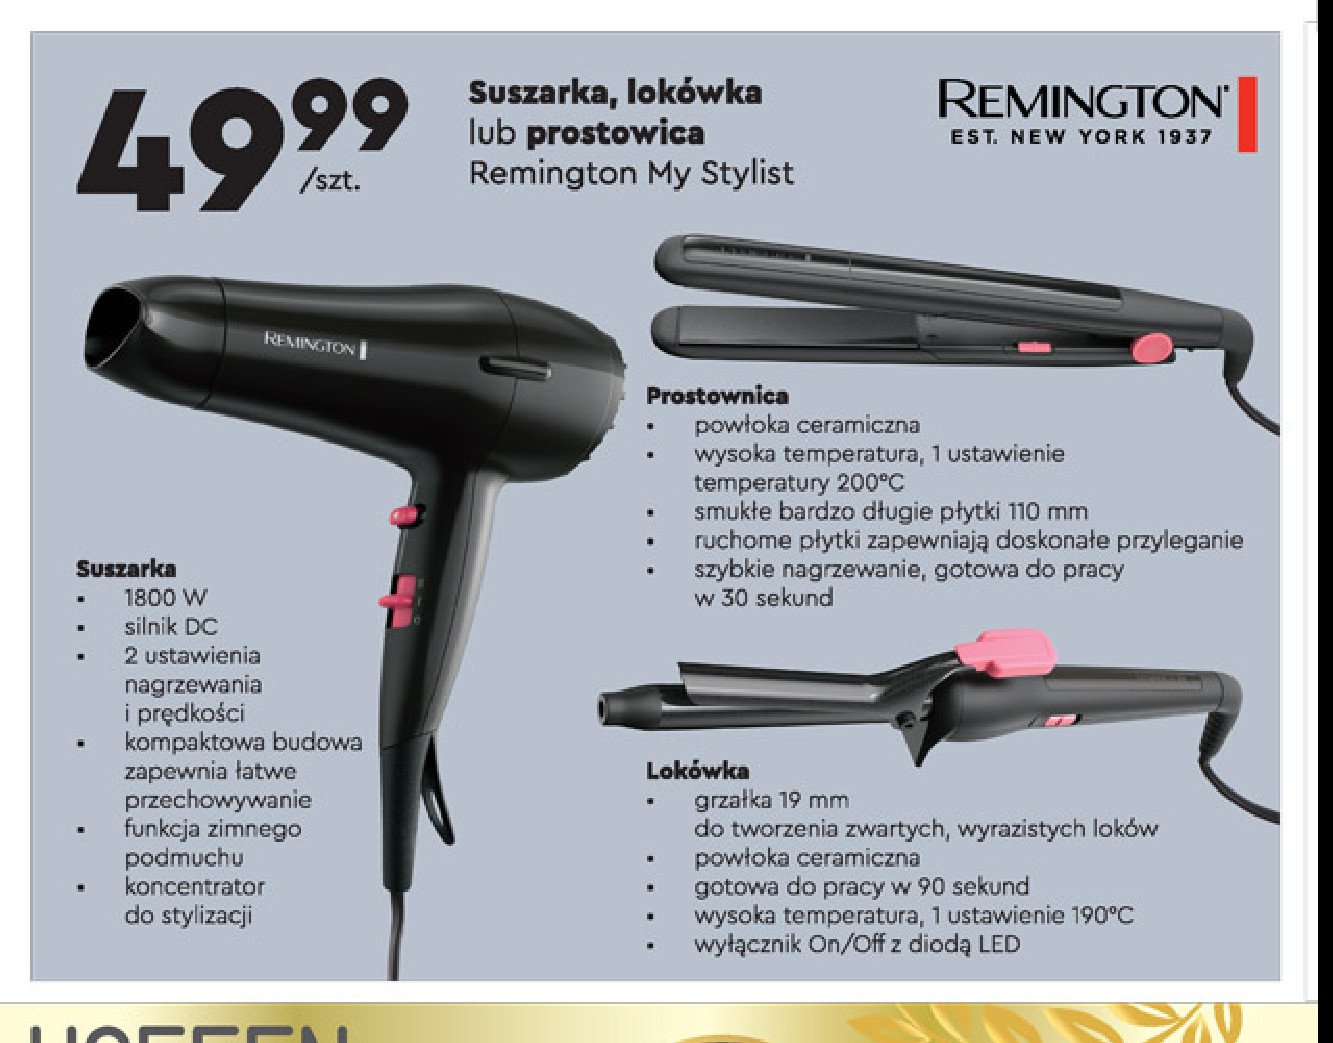 Suszarka d2121 Remington promocja